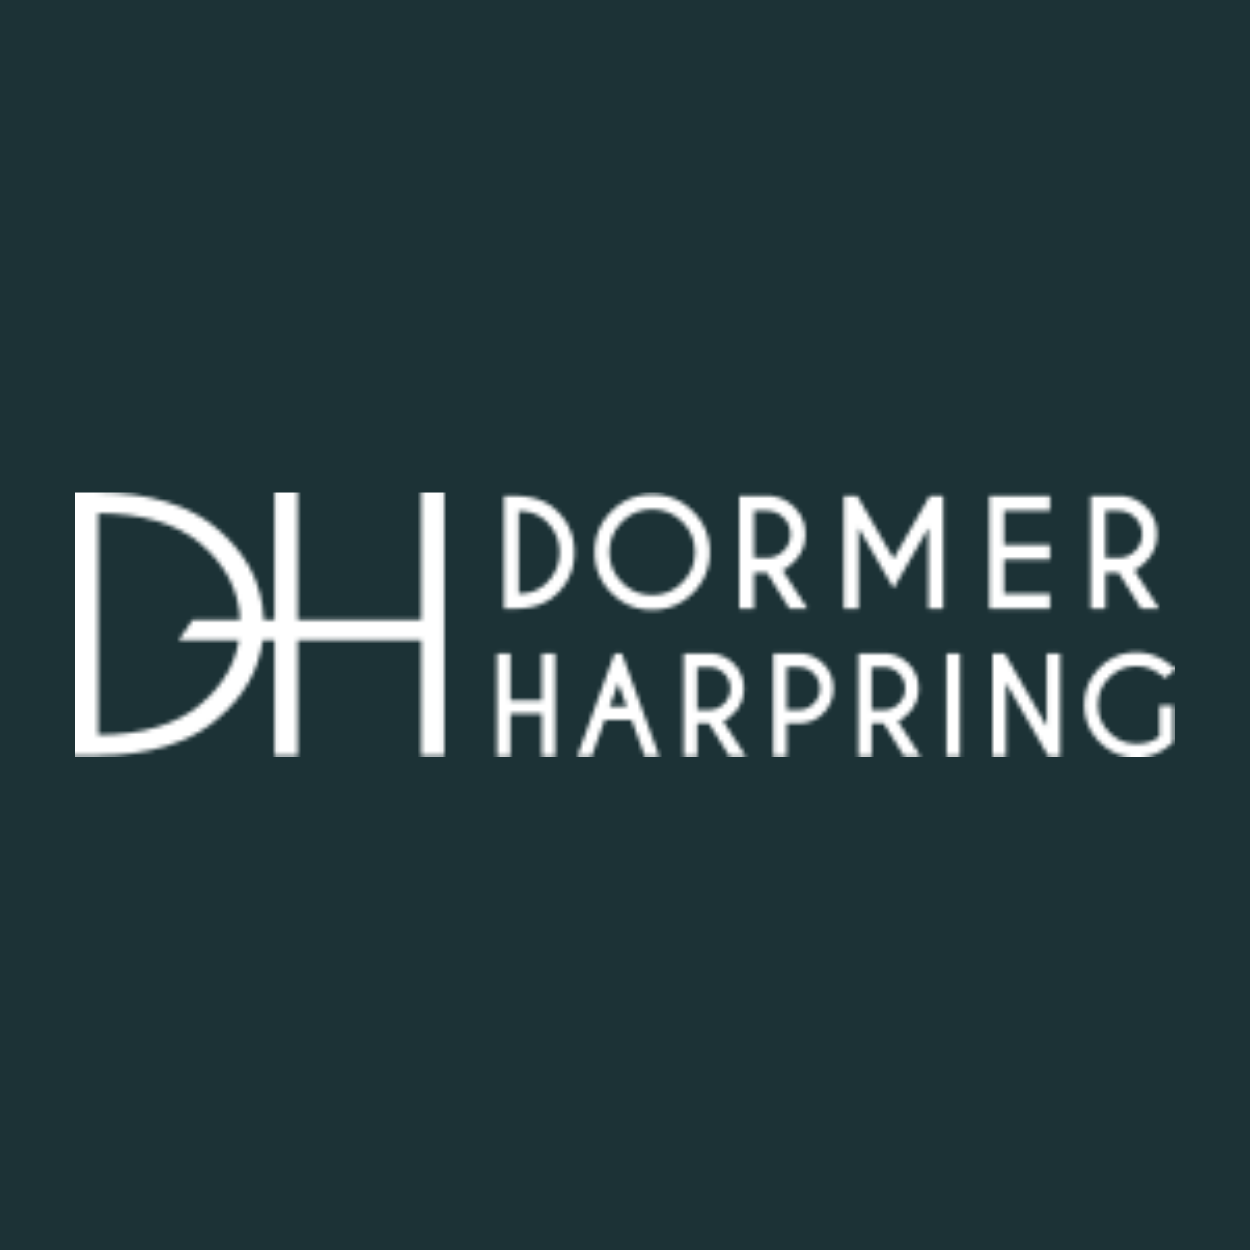 Dormer Harpring Logo